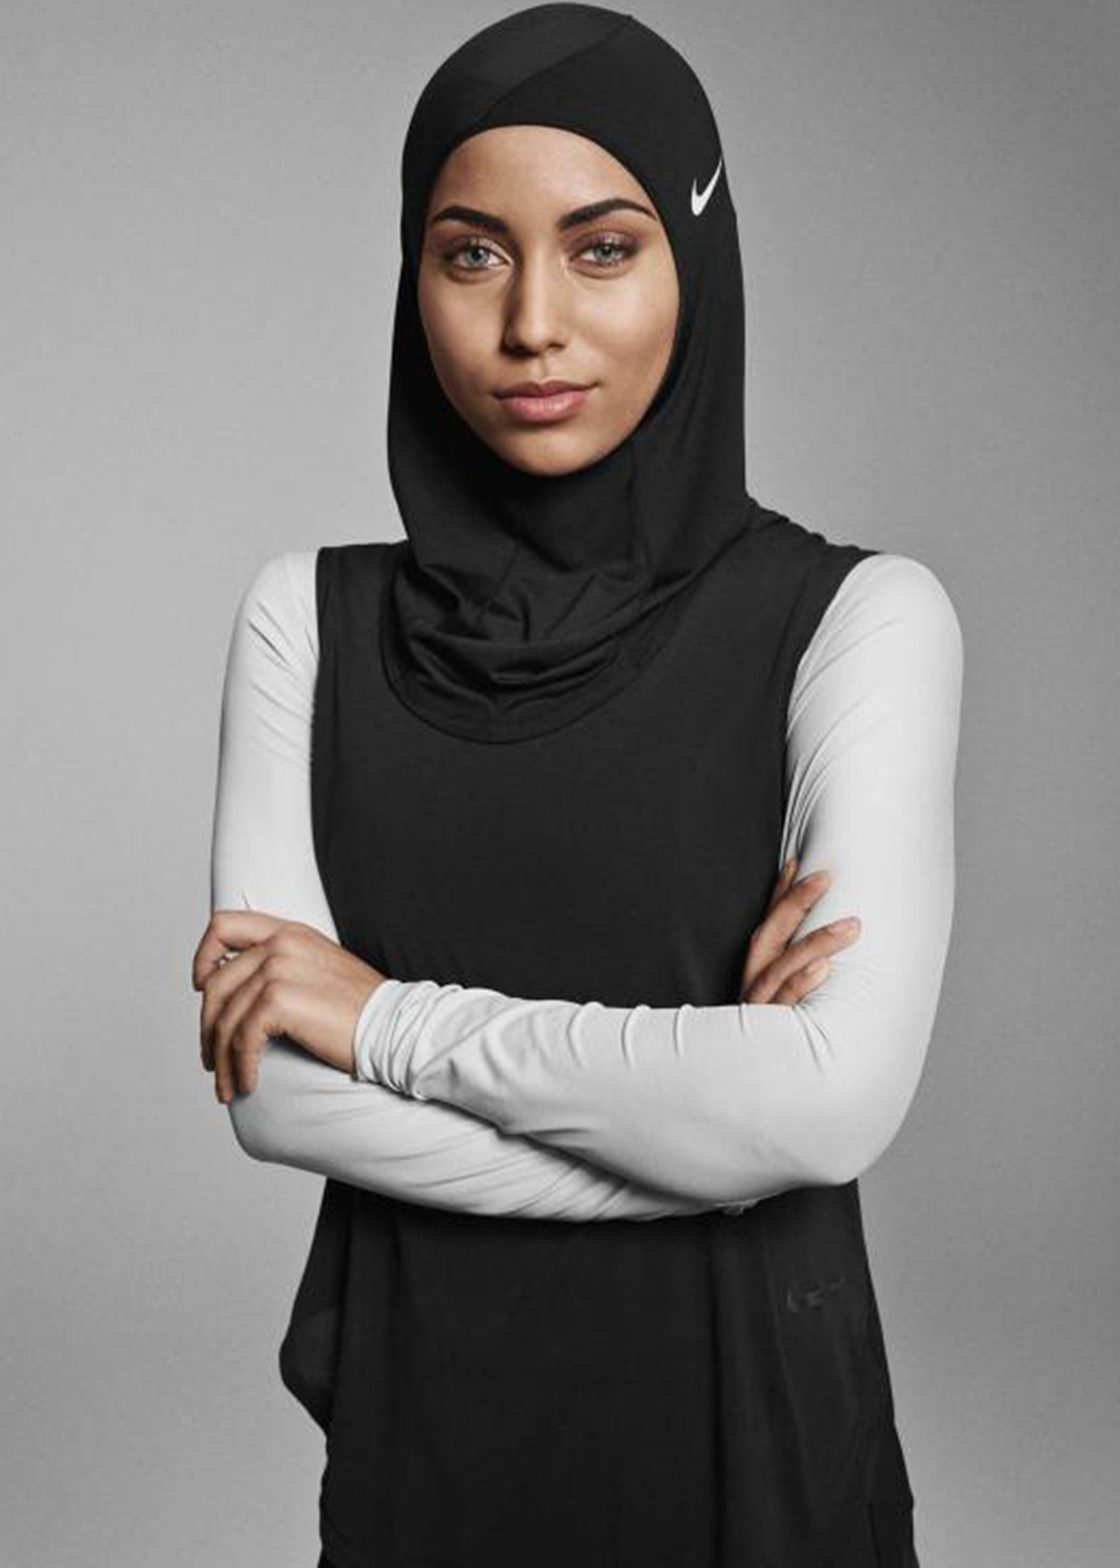 Nike Launching a Line for Muslim - InsideHook